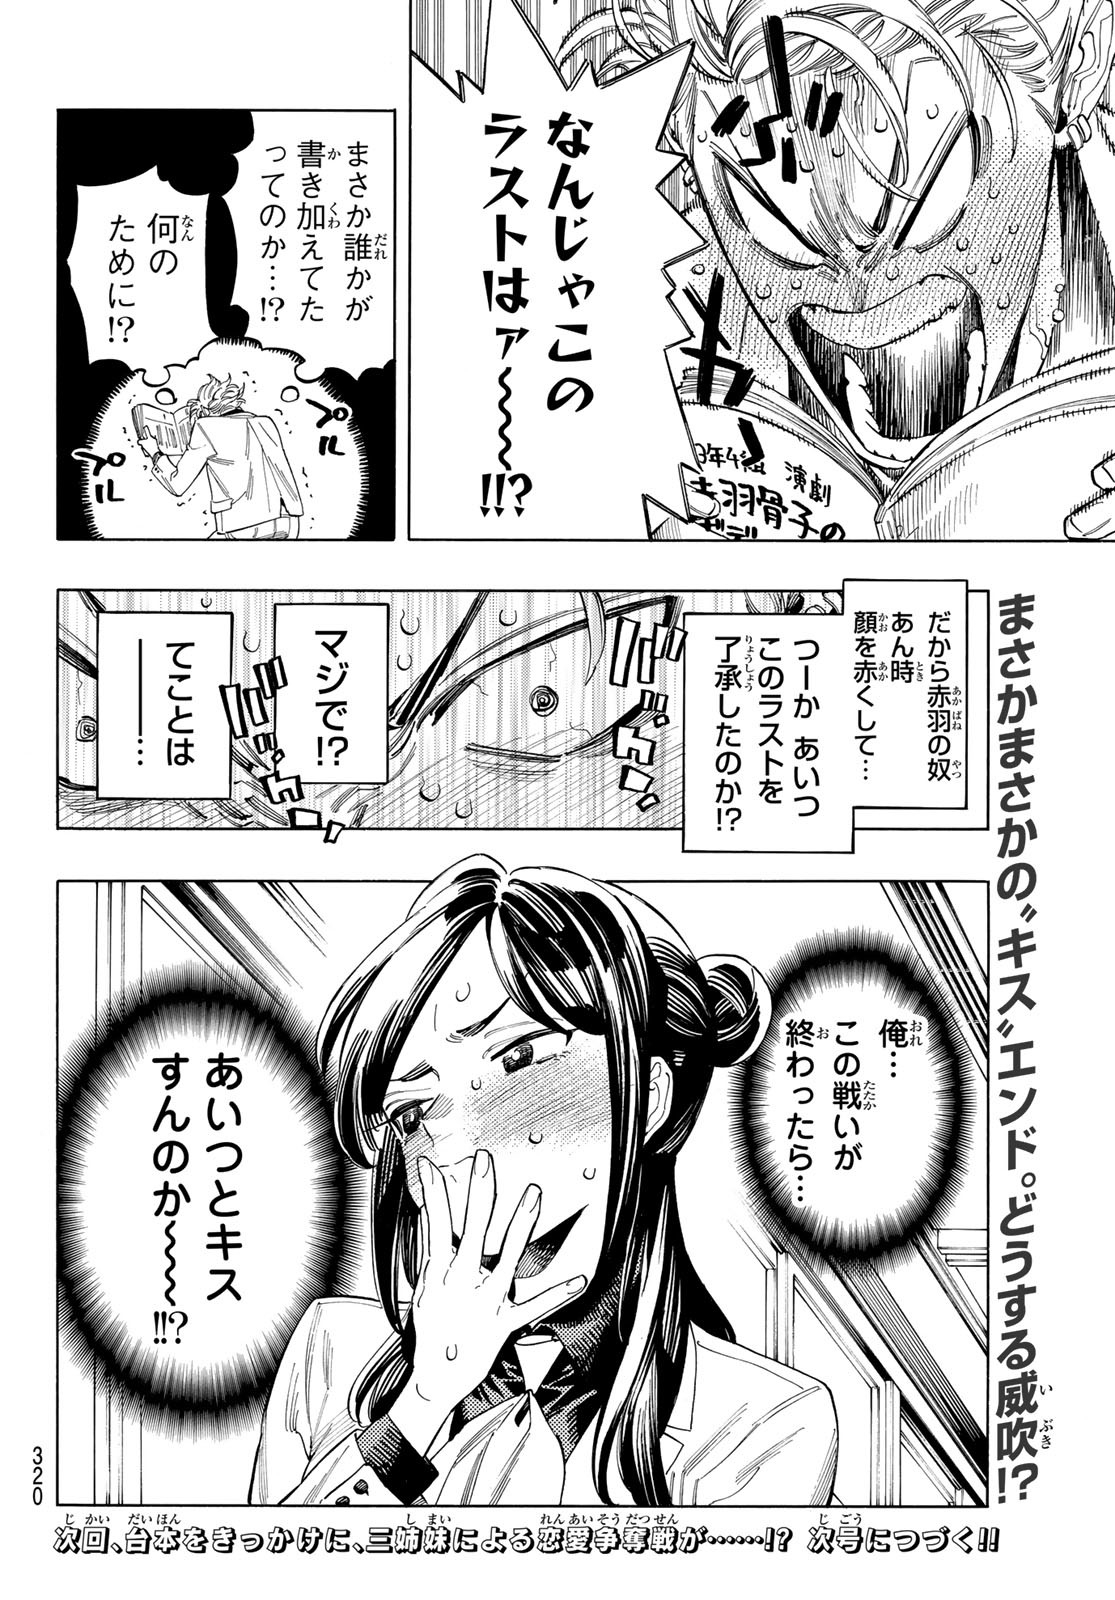 Akabane Honeko no Bodyguard - Chapter 59 - Page 20